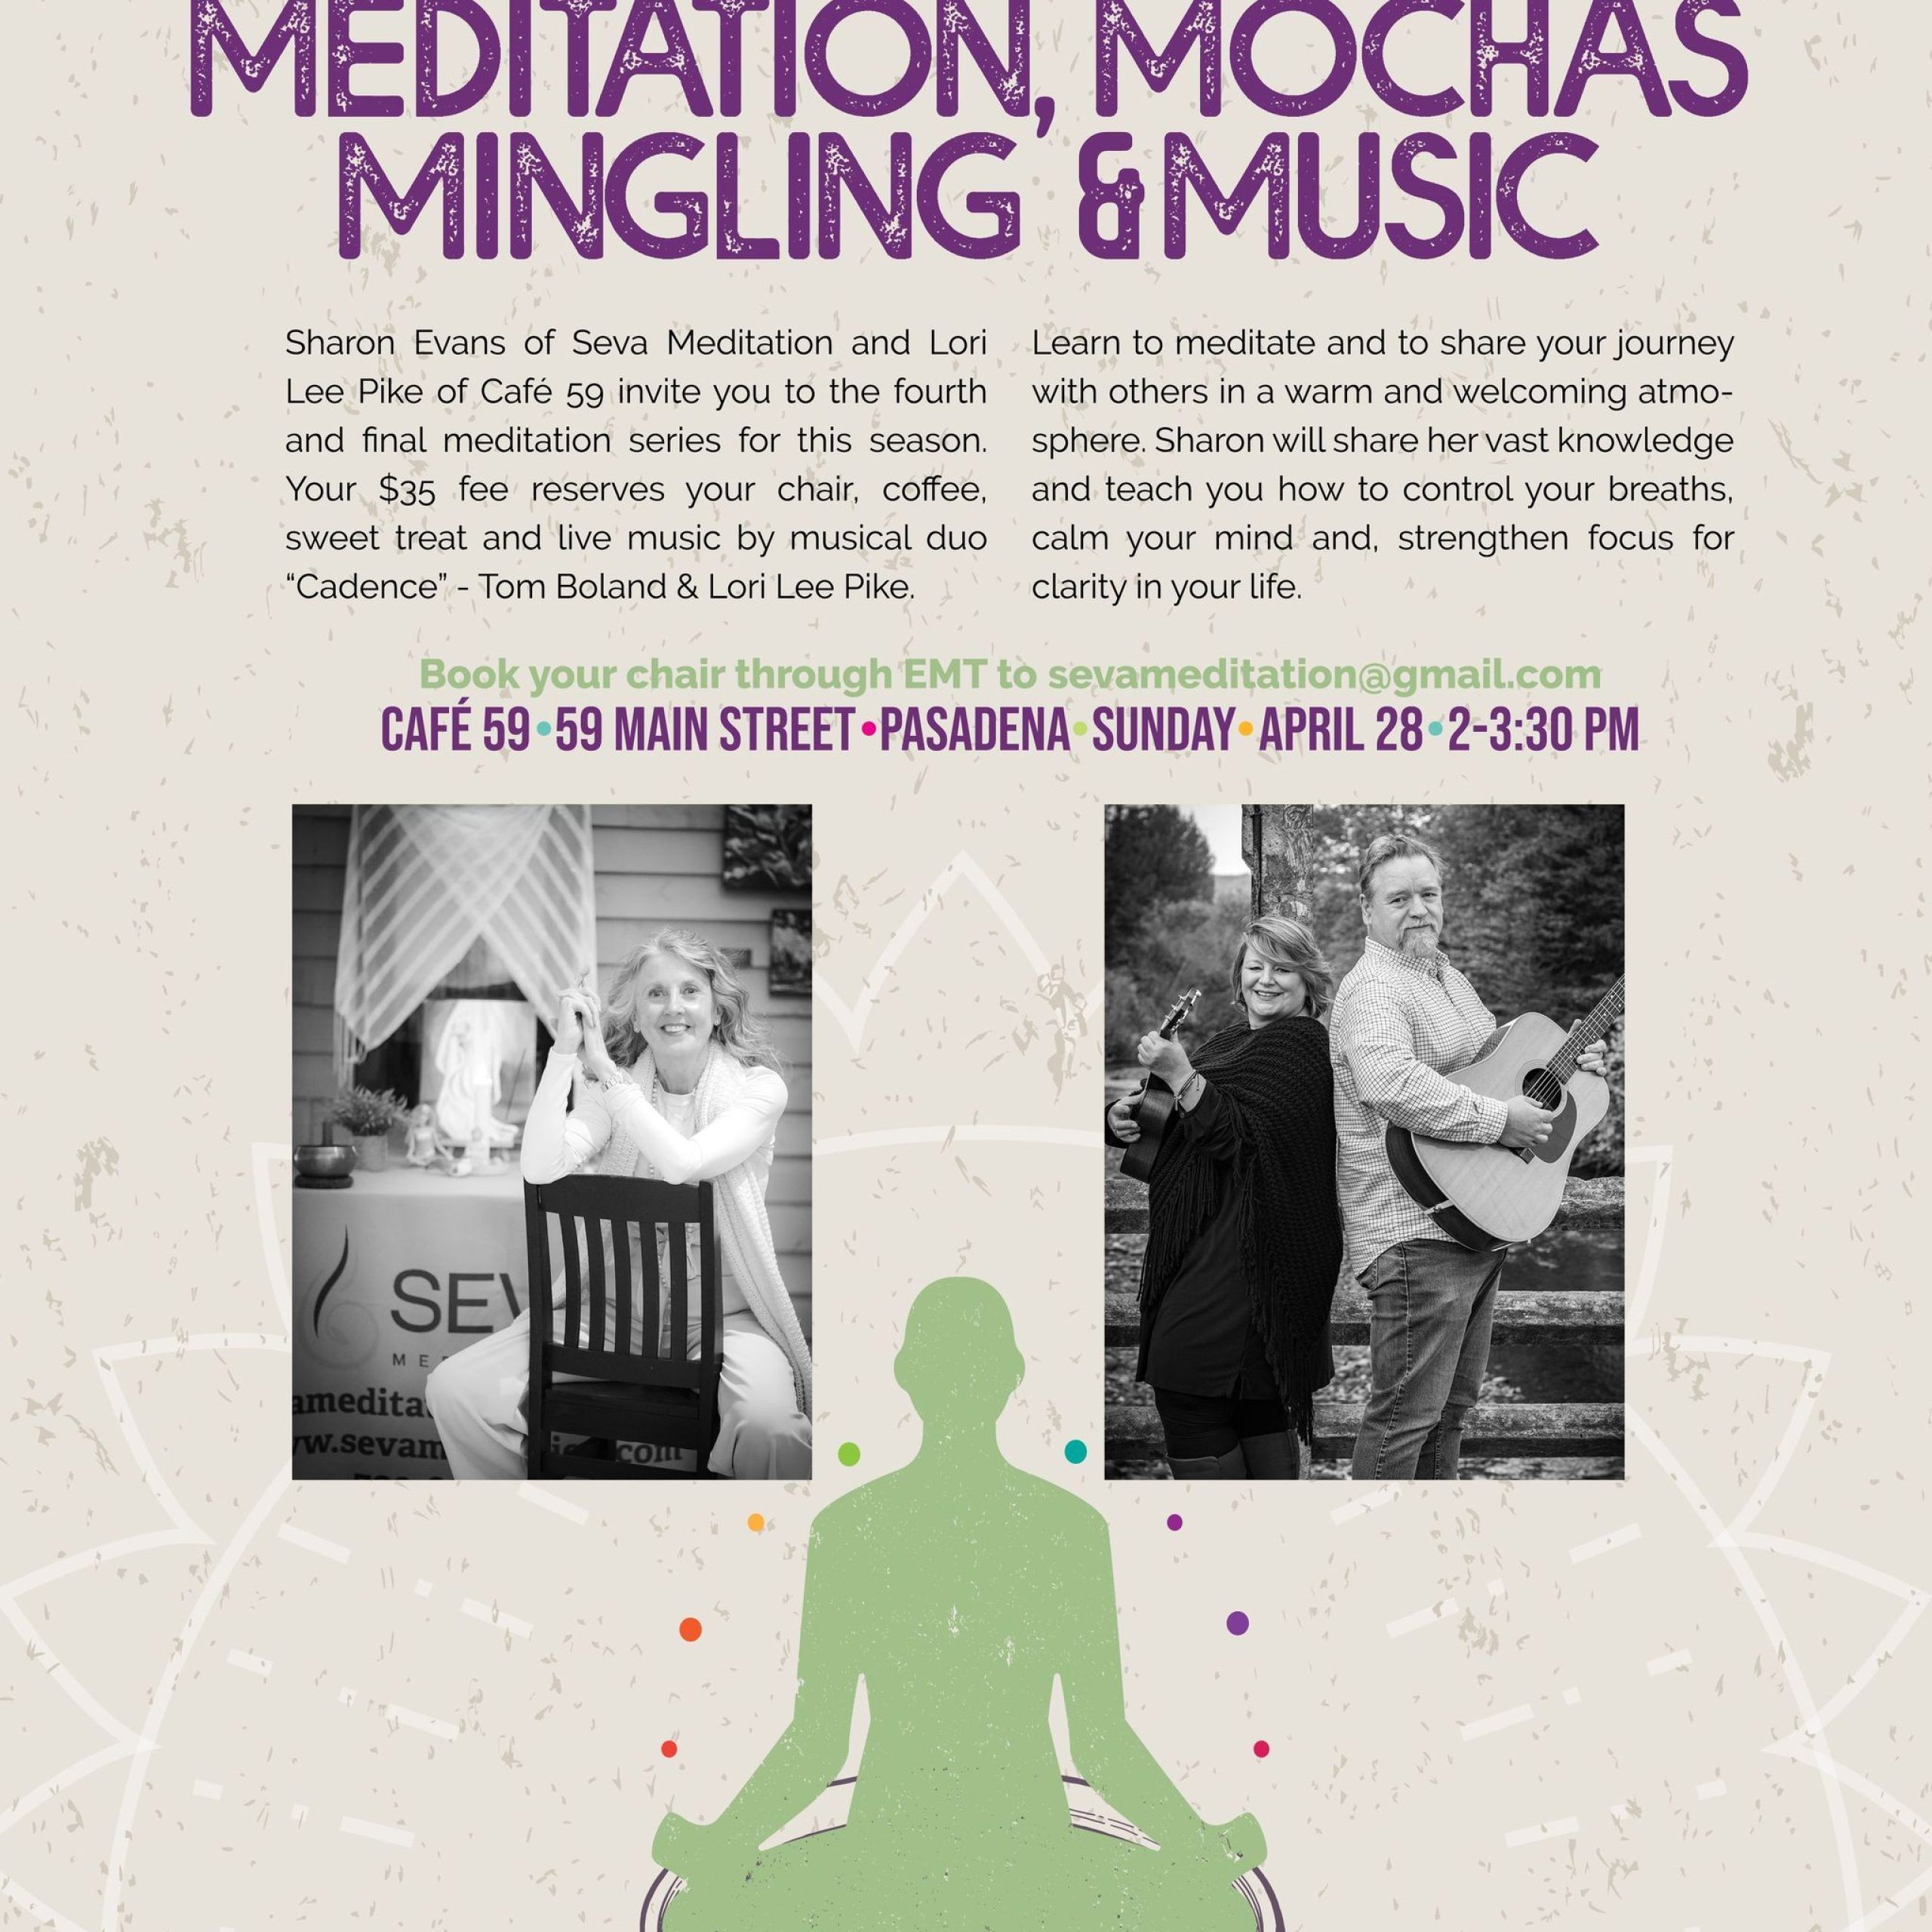 Meditation, Mochas, Mingling & Music Event ~ Cafe 59